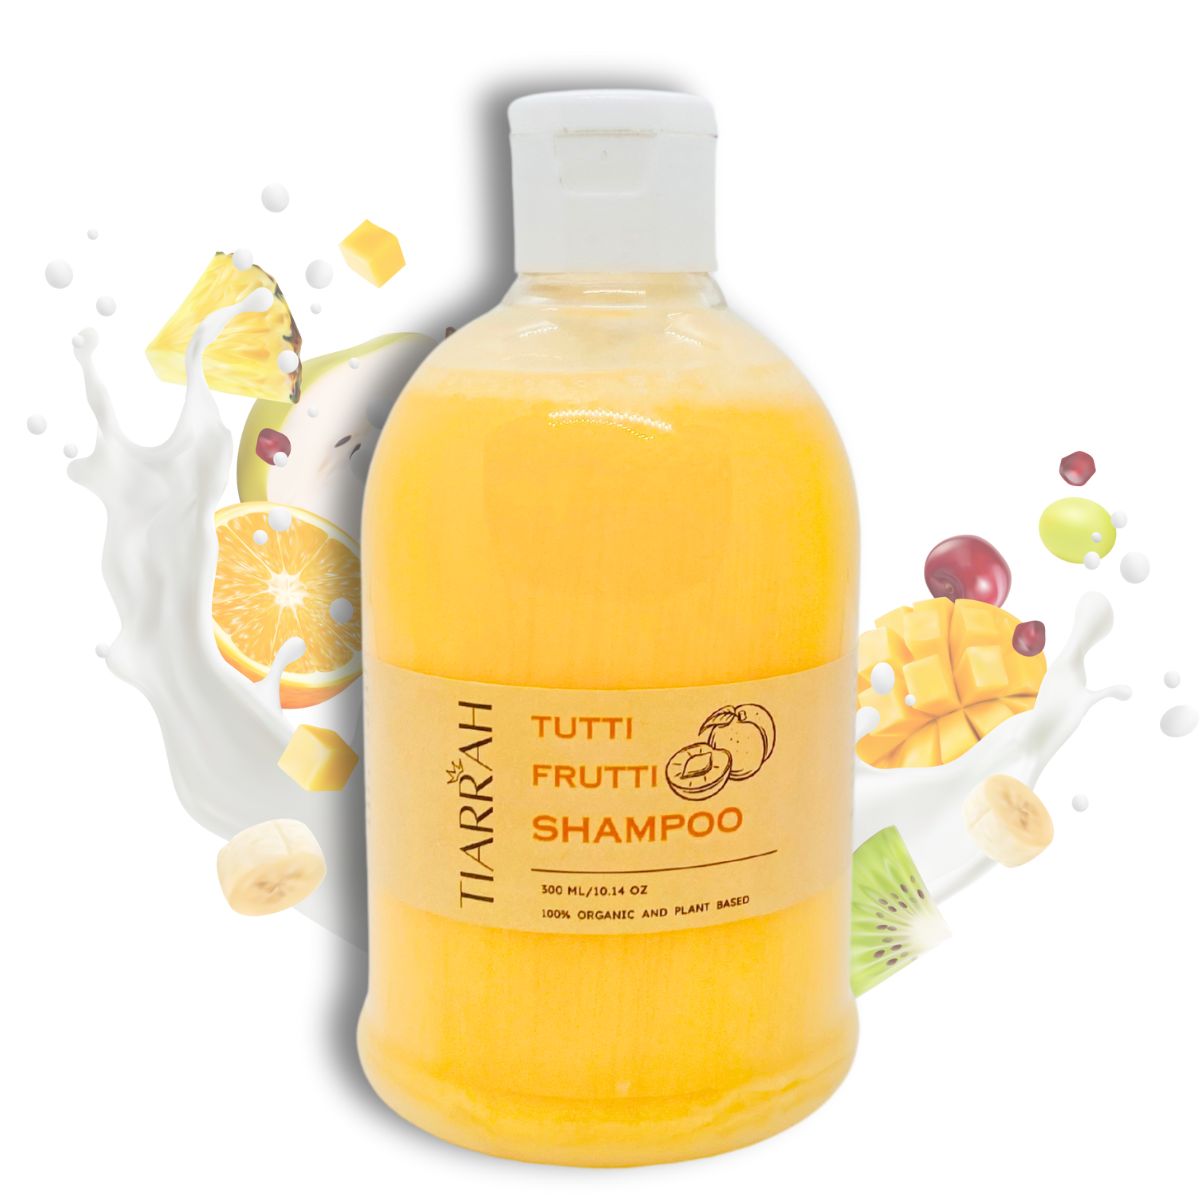 Tiarrah Tutti Frutti Shampoo: Natural, Organic, Non-Toxic - The Luxury Bath and Body Care Shop